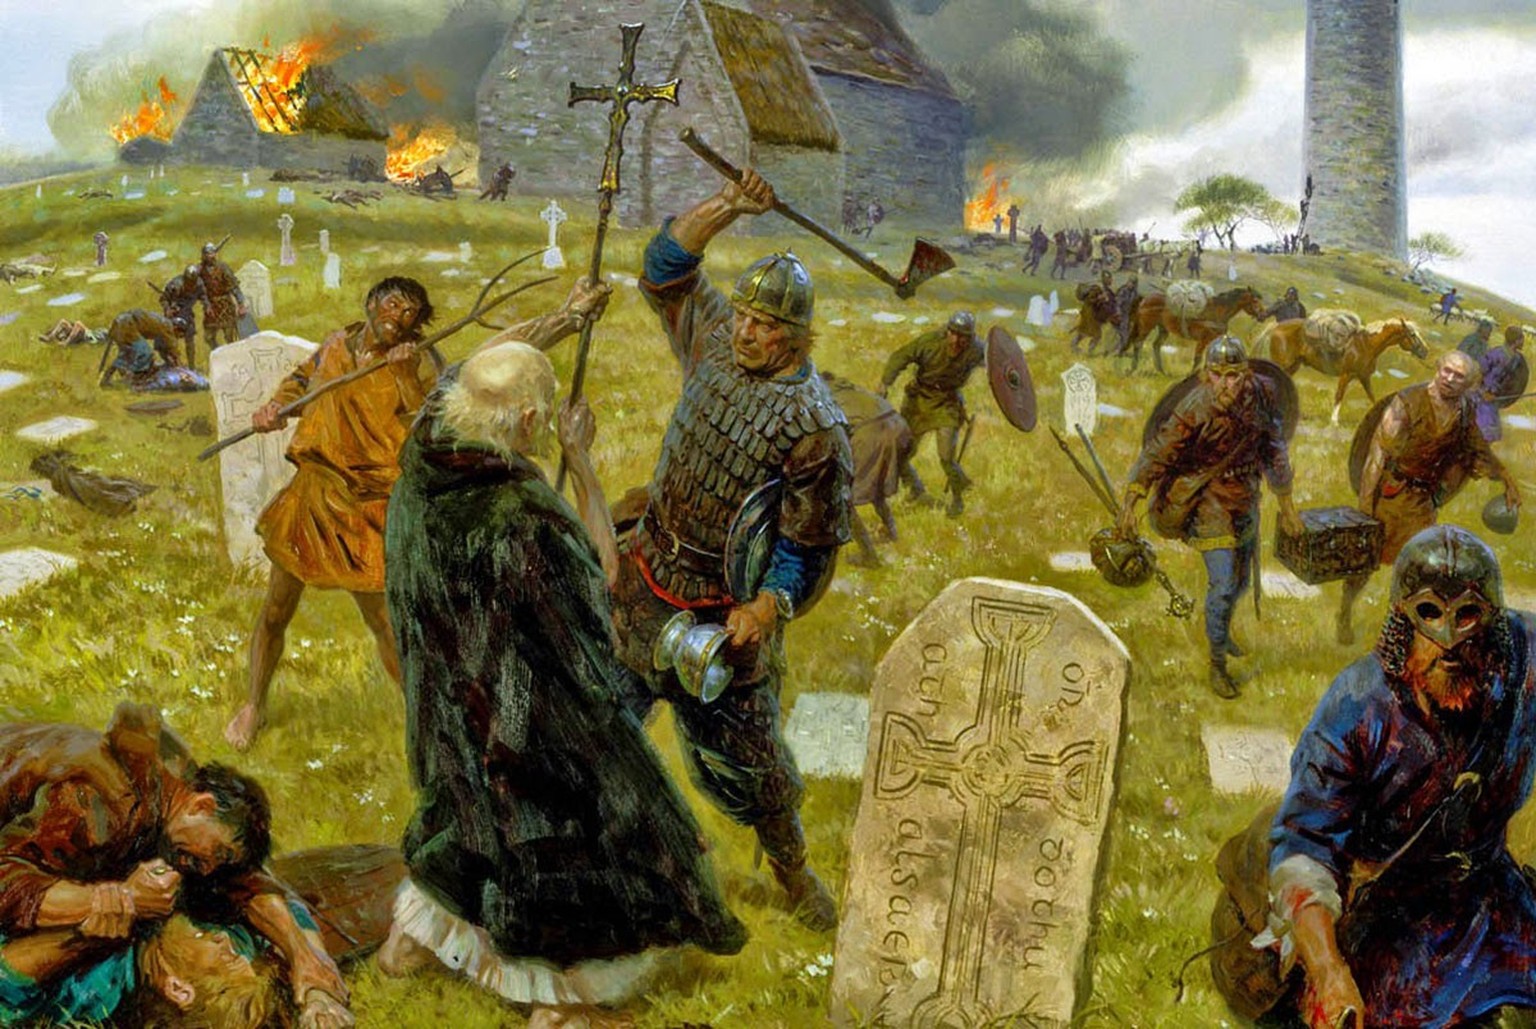 Représentation artistique d’une attaque de l’abbaye d’Iona par les Vikings.
https://www.pinterest.at/pin/365073113524685158/